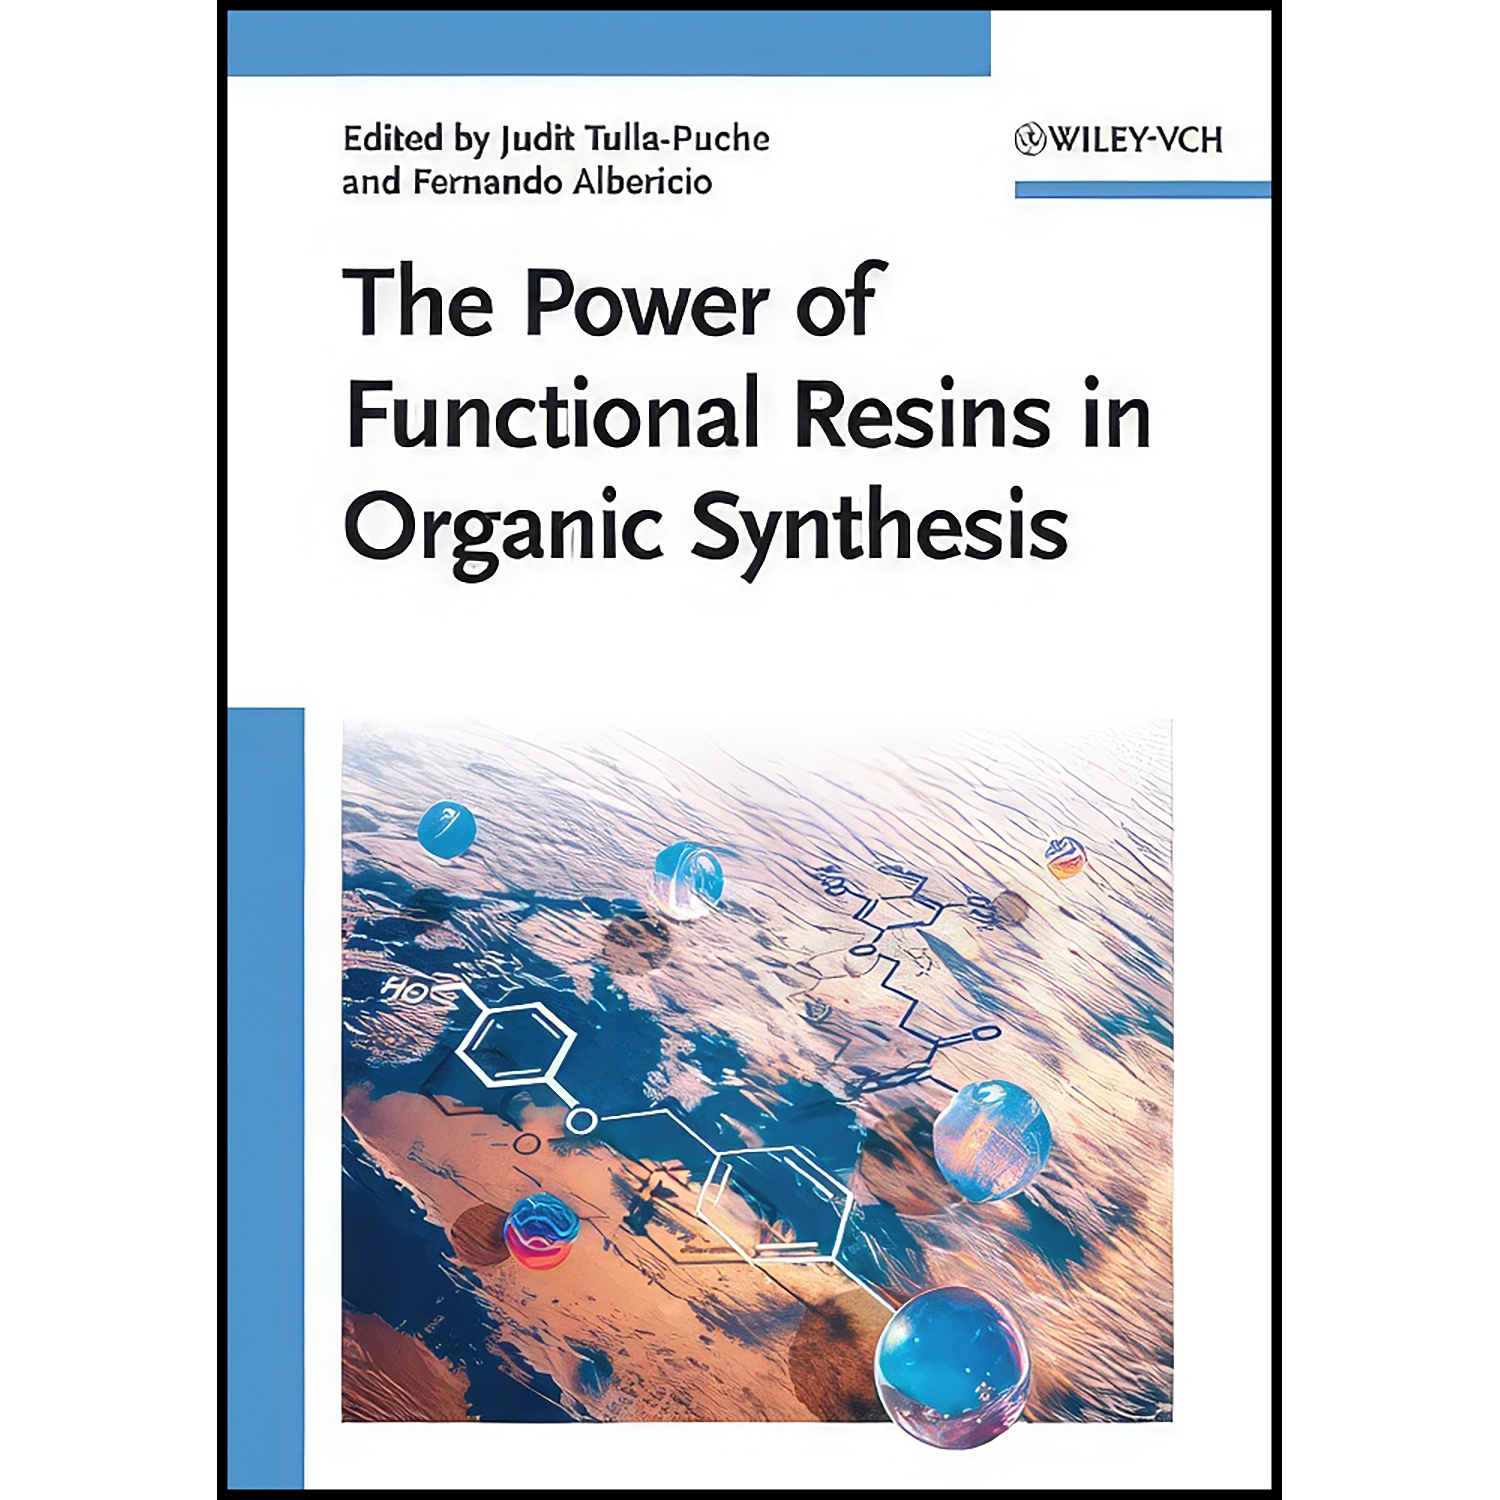 کتاب The Power of Functional Resins in Organic Synthesis اثر جمعي از نويسندگان انتشارات Wiley-VCH